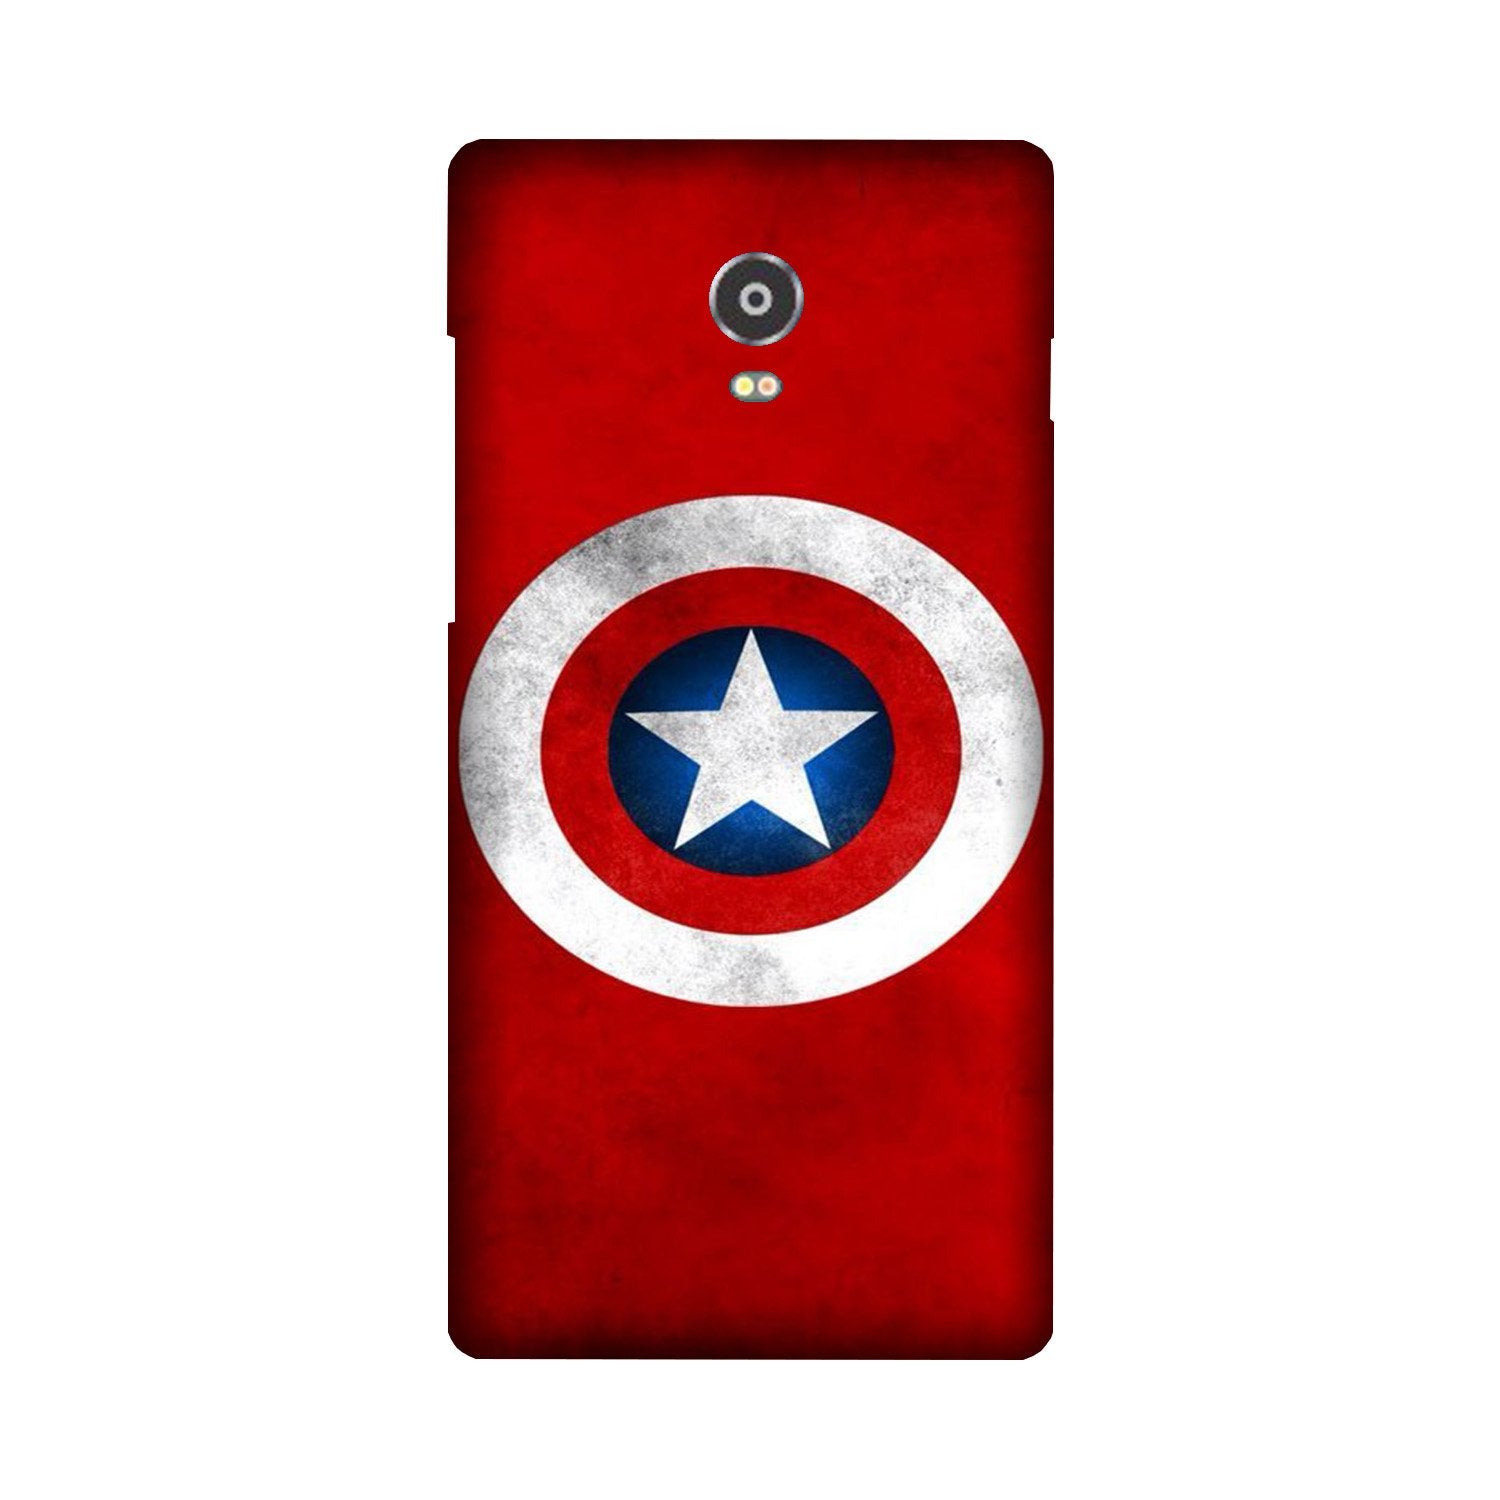 Captain America Case for Lenovo Vibe P1 (Design No. 249)